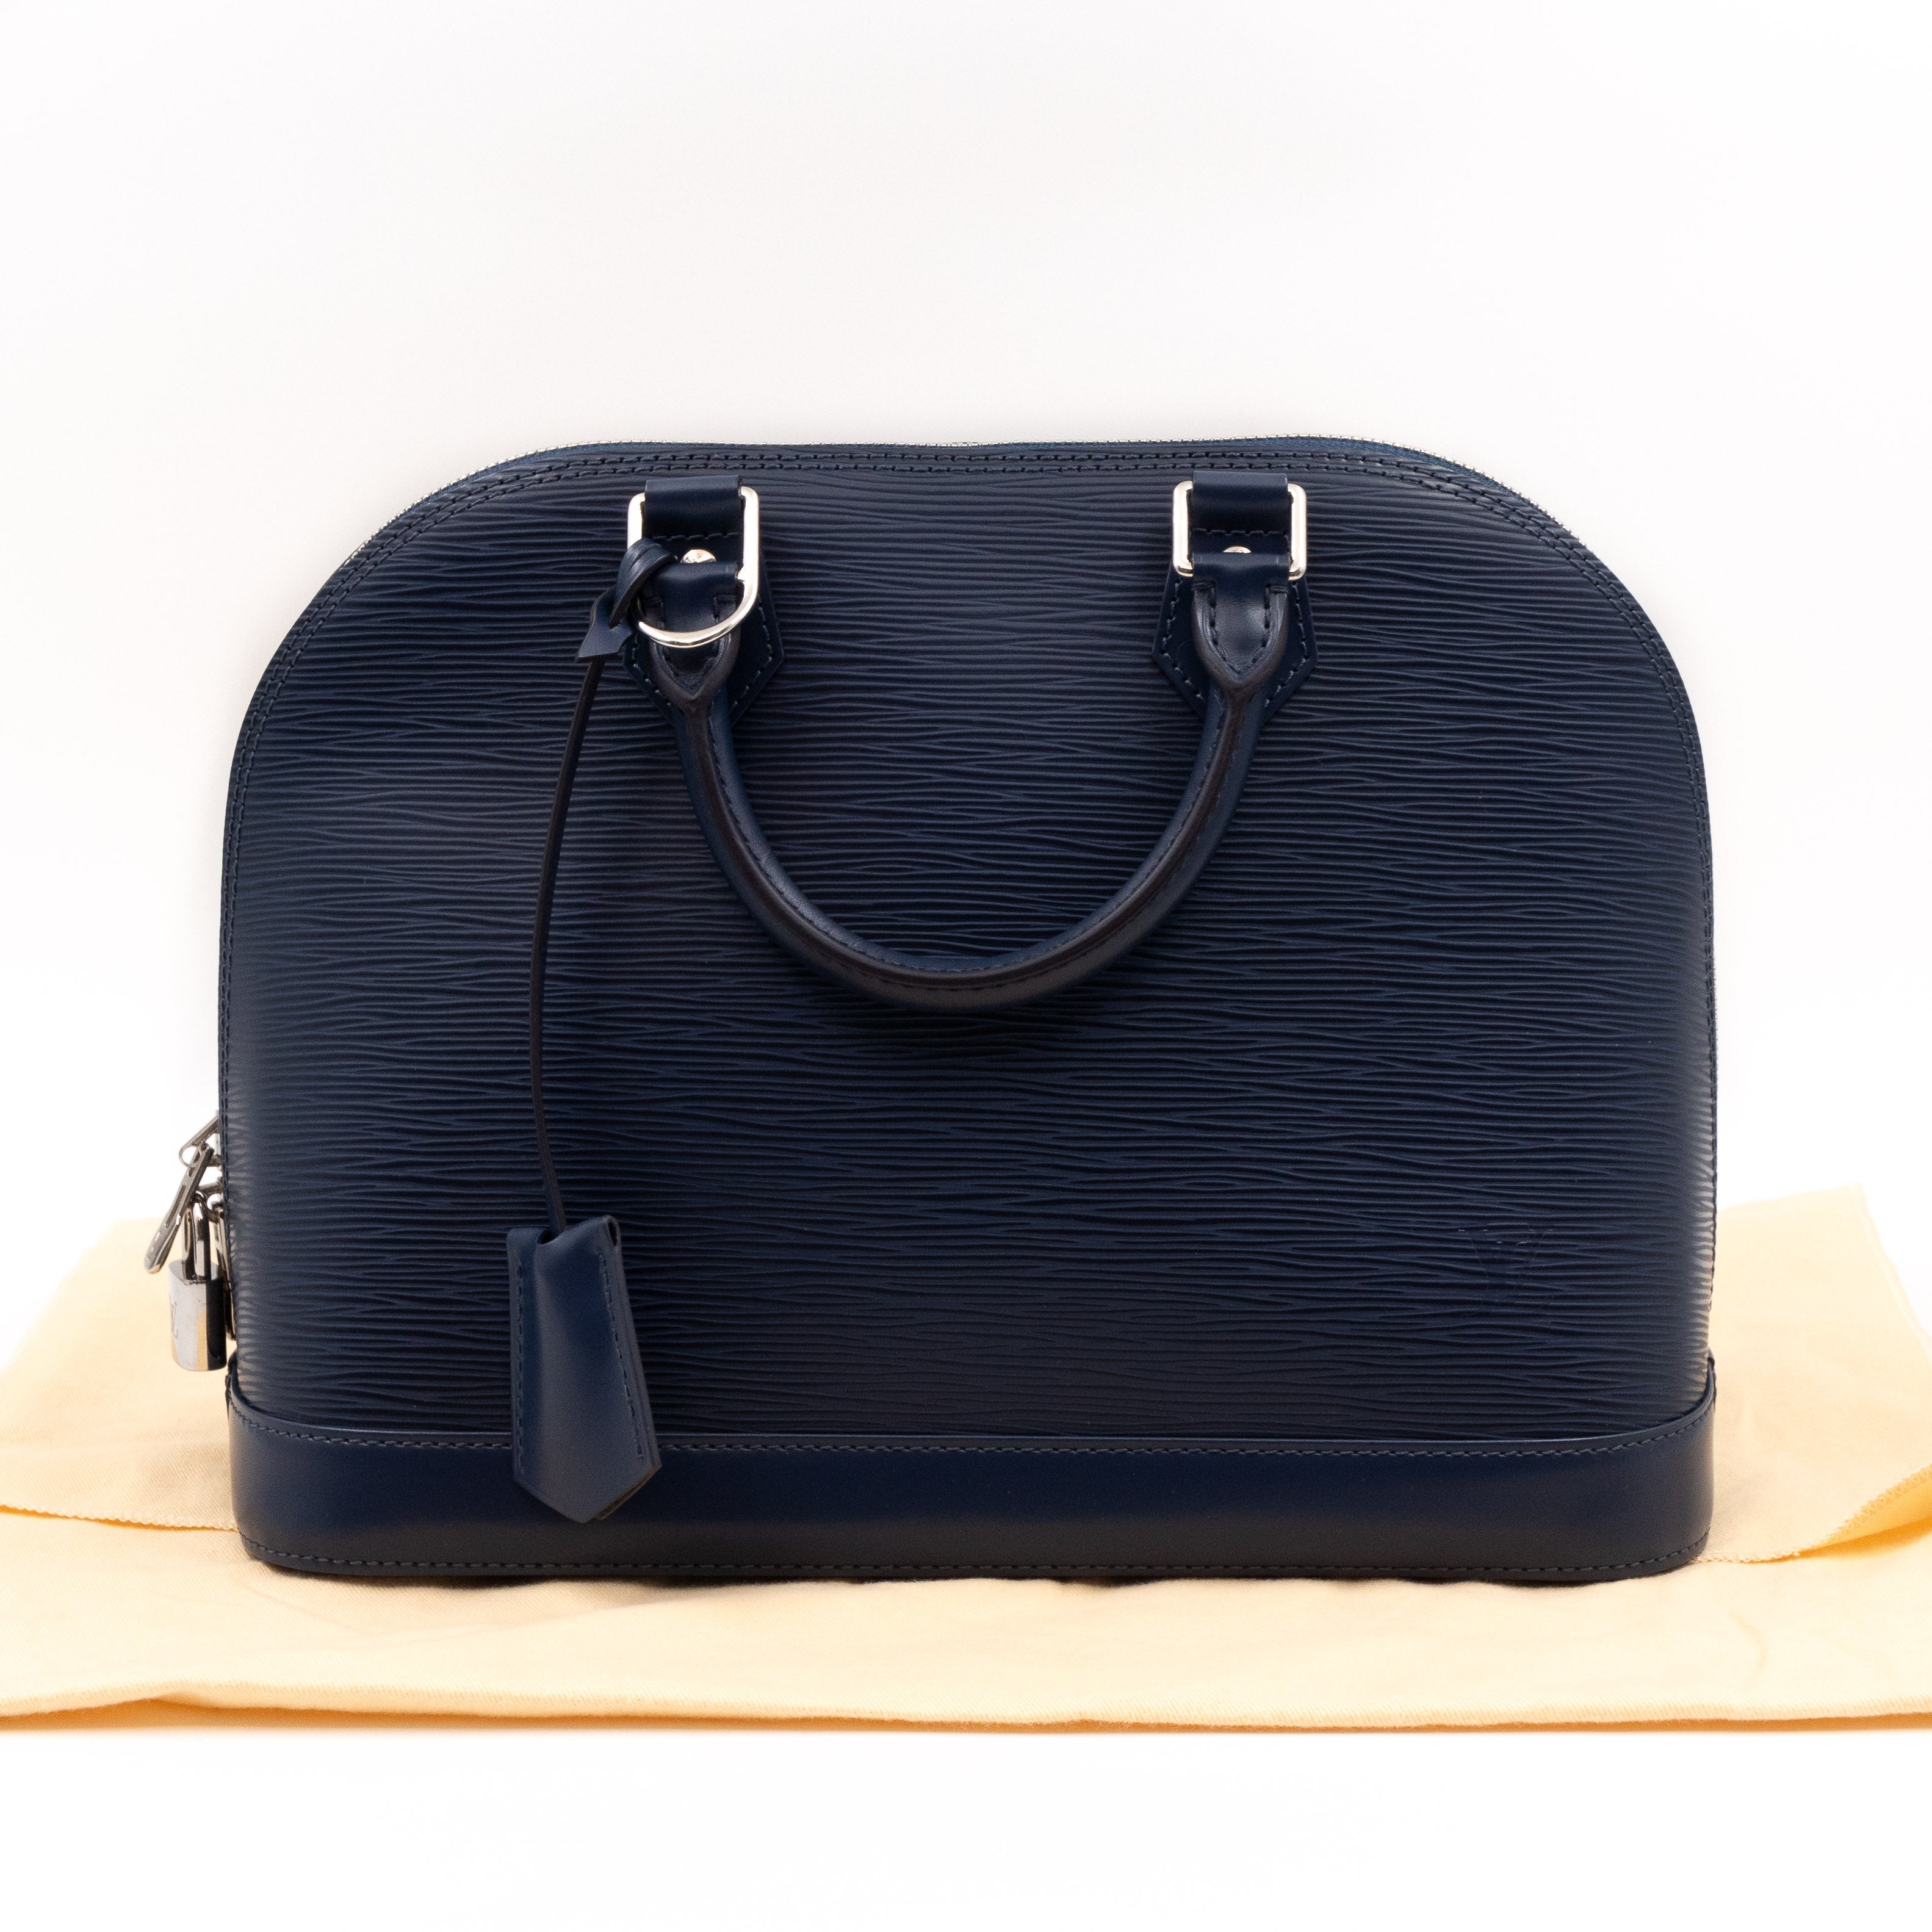 Isabella's Wardrobe - Louis Vuitton Alma PM Epi Leather Indigo Bag -  in-store now! #designer #luxury #LouisVuitton #fashion #style #handbags  #preowned #consignment #designerbags #black #ootd #fashionstyle #Glasgow  #westend #scotland